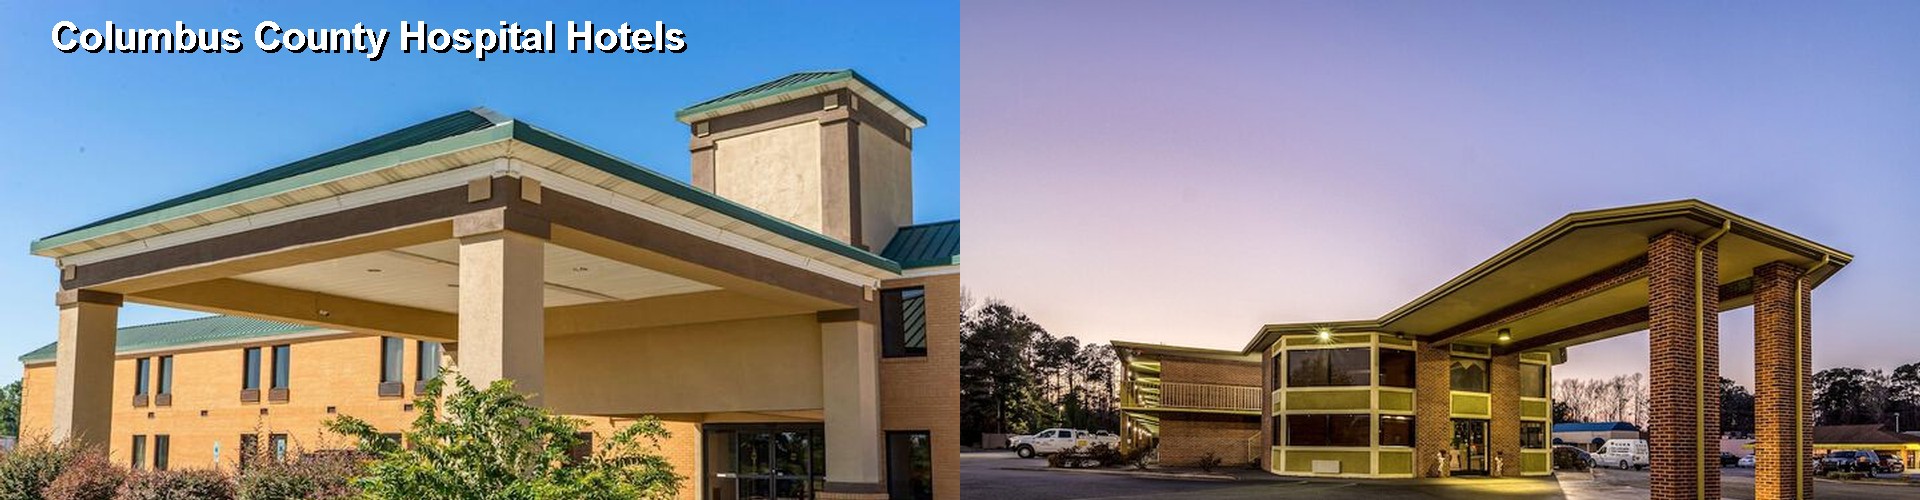 3 Best Hotels near Columbus County Hospital